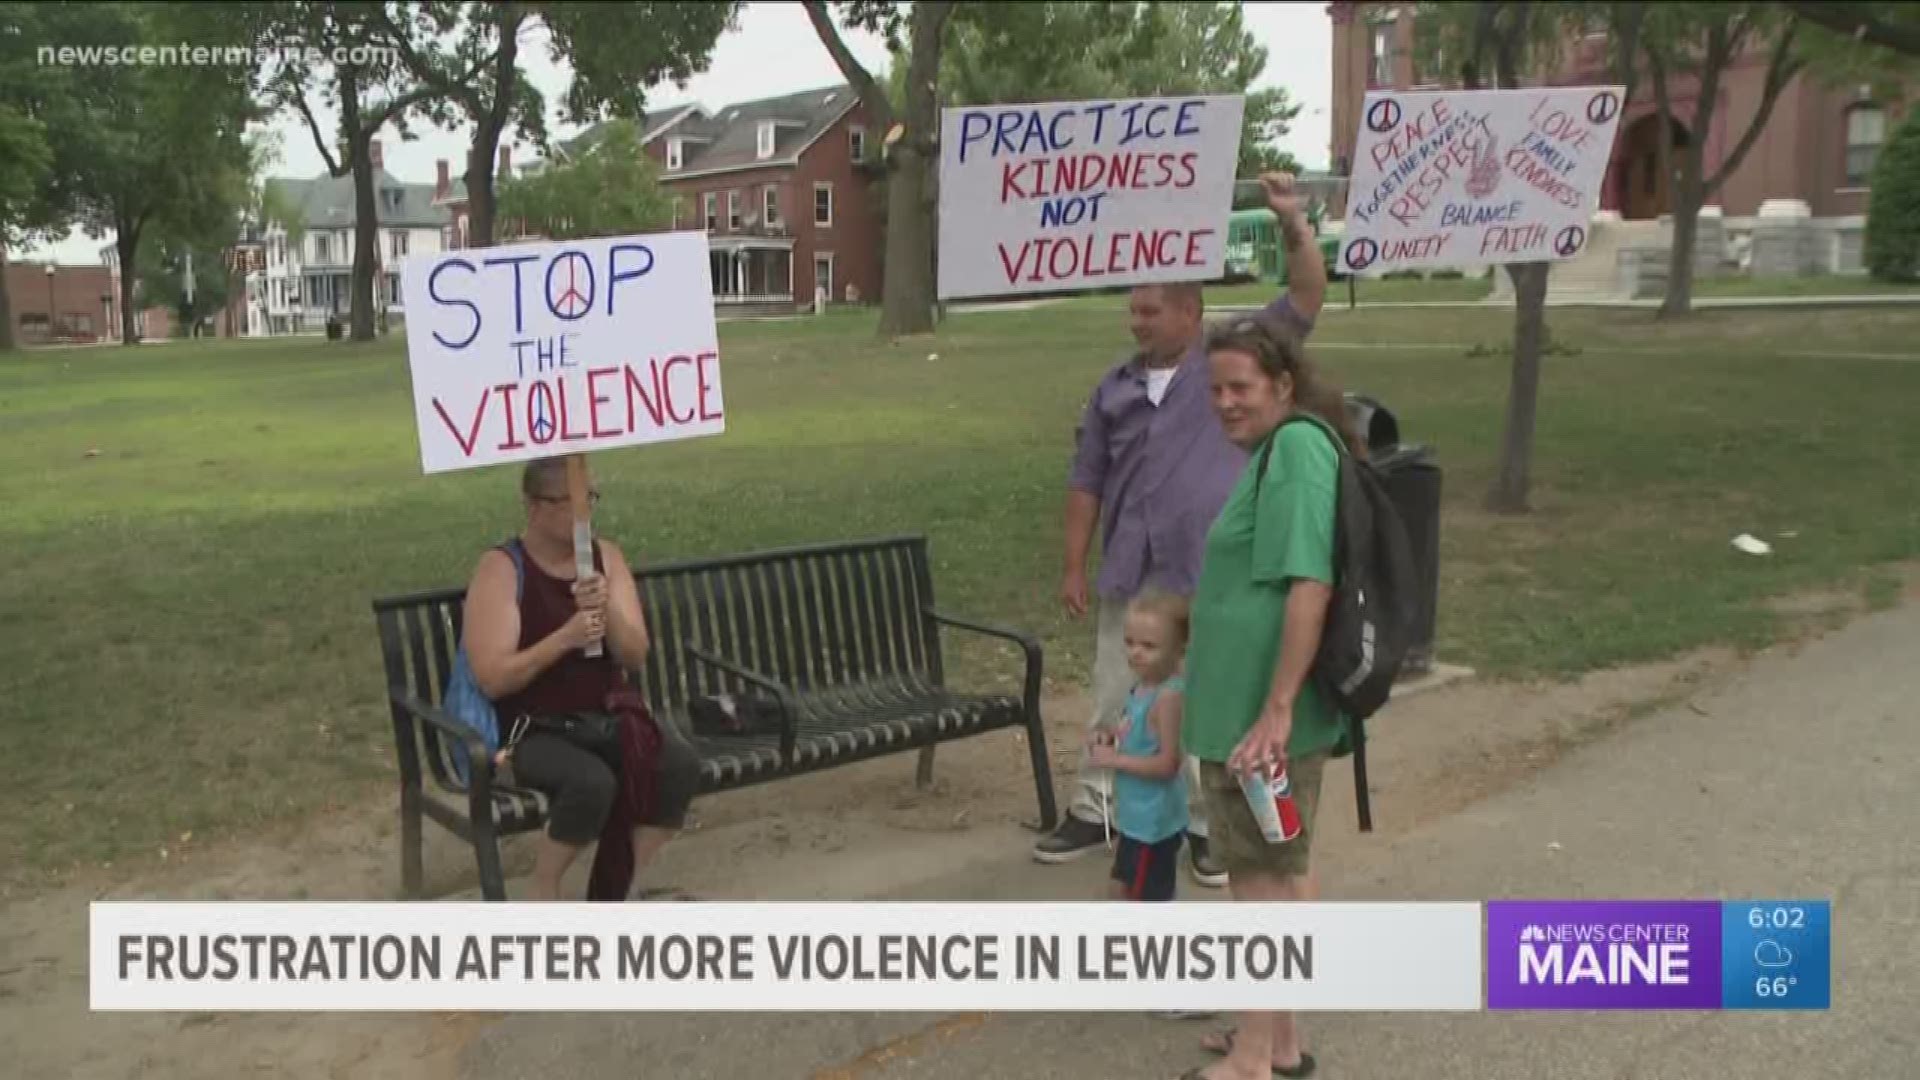 Frustration after more violence in Lewiston